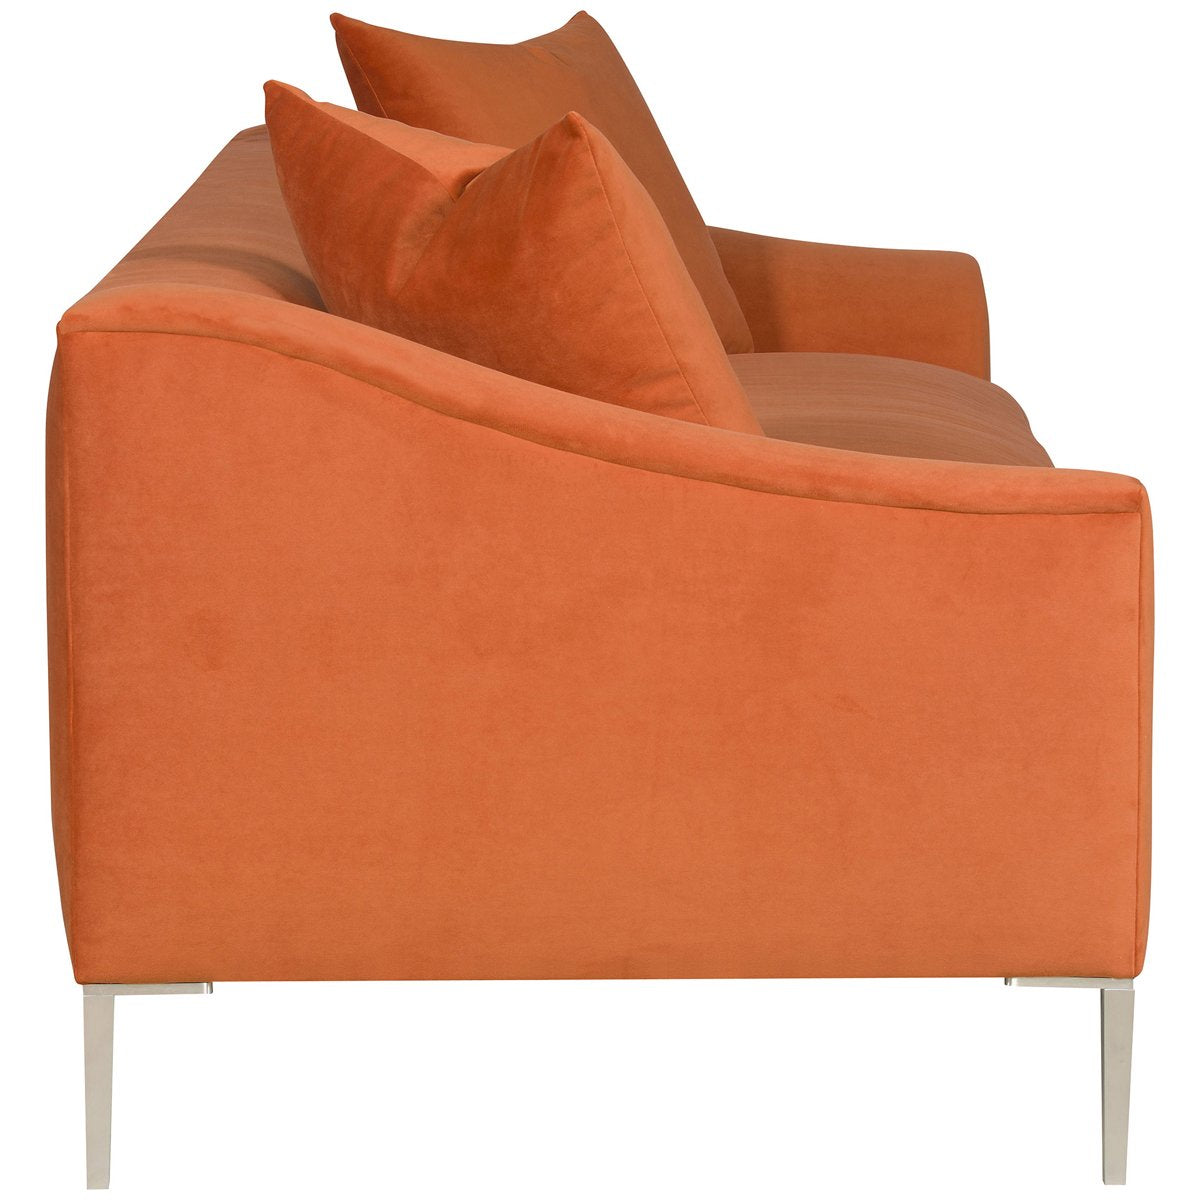 Vanguard Furniture Tess Bench Seat Sofa